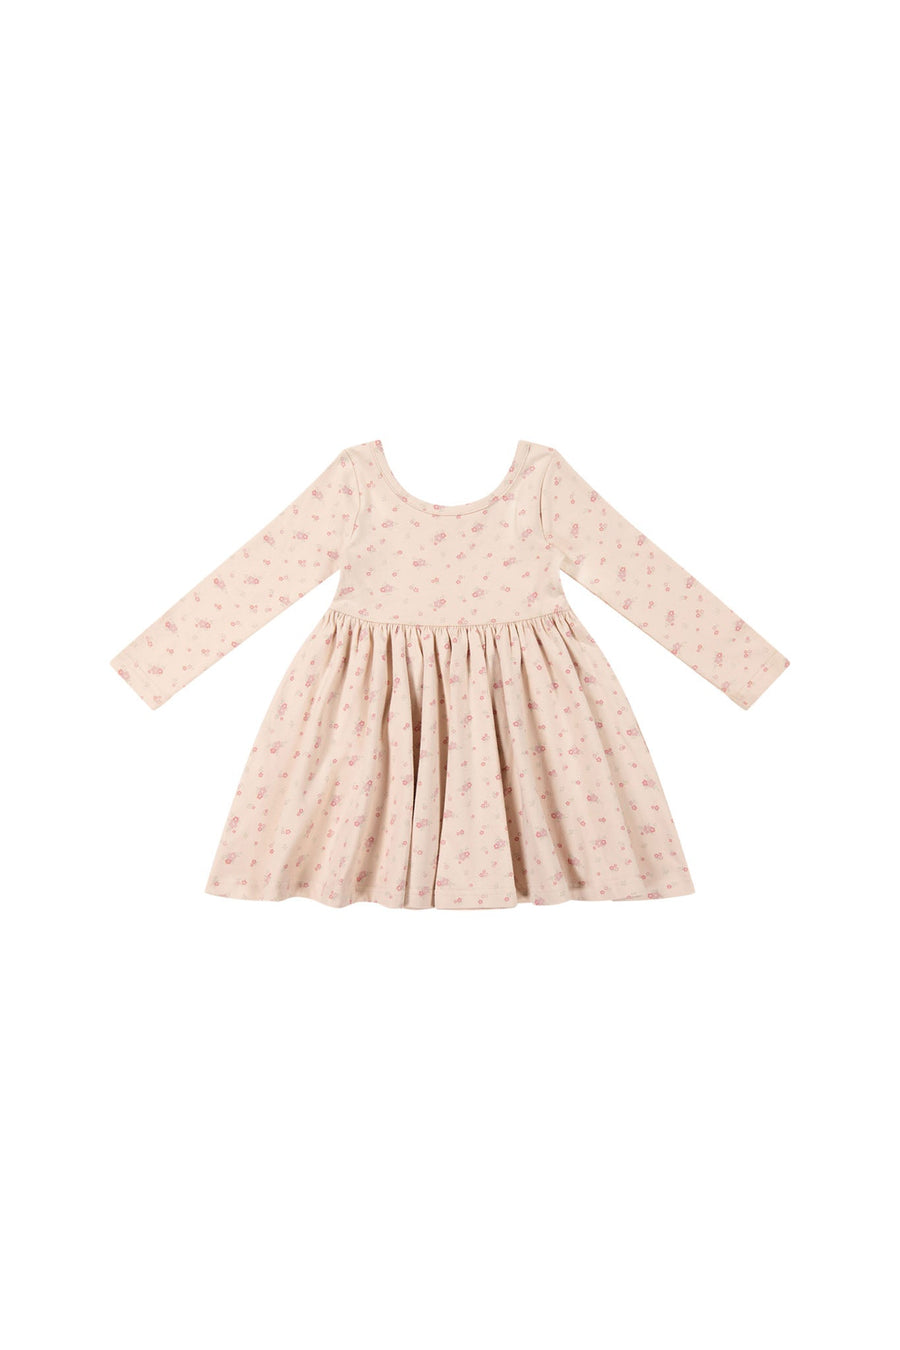 Organic Cotton Tallulah Dress - Cindy Whisper Pink Childrens Dress from Jamie Kay NZ